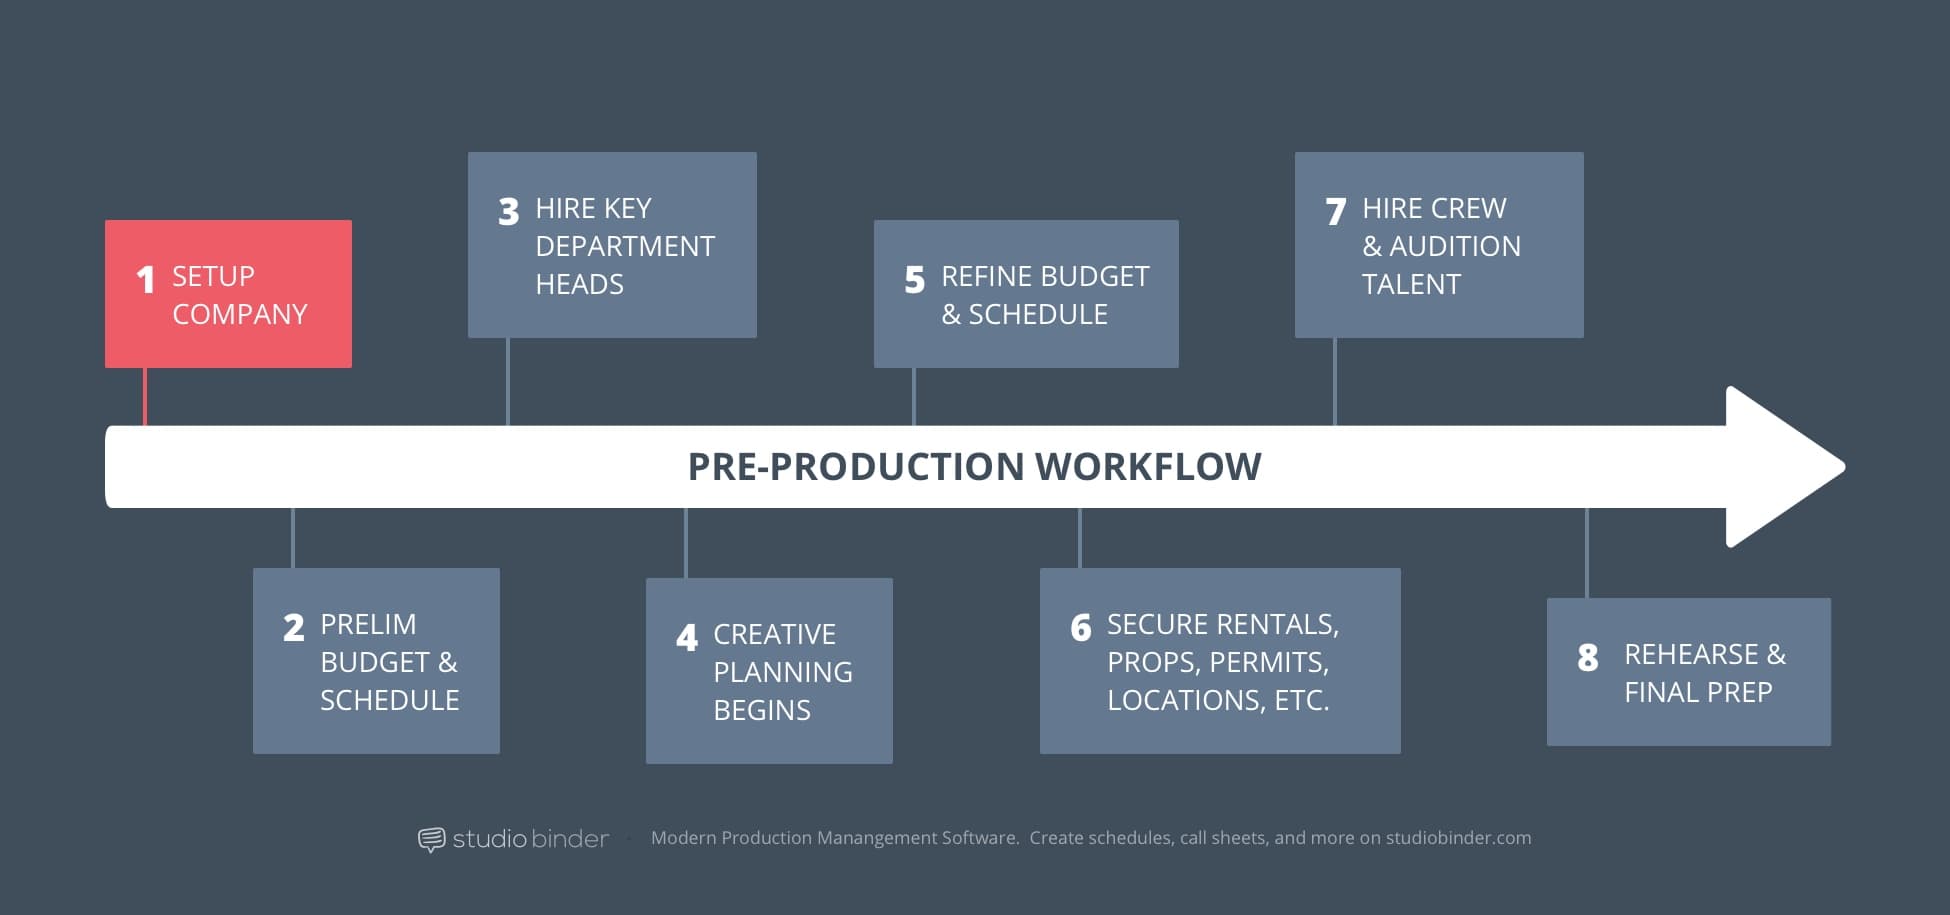 1 - StudioBinder Pre-Production Workflow - Setup Production Company